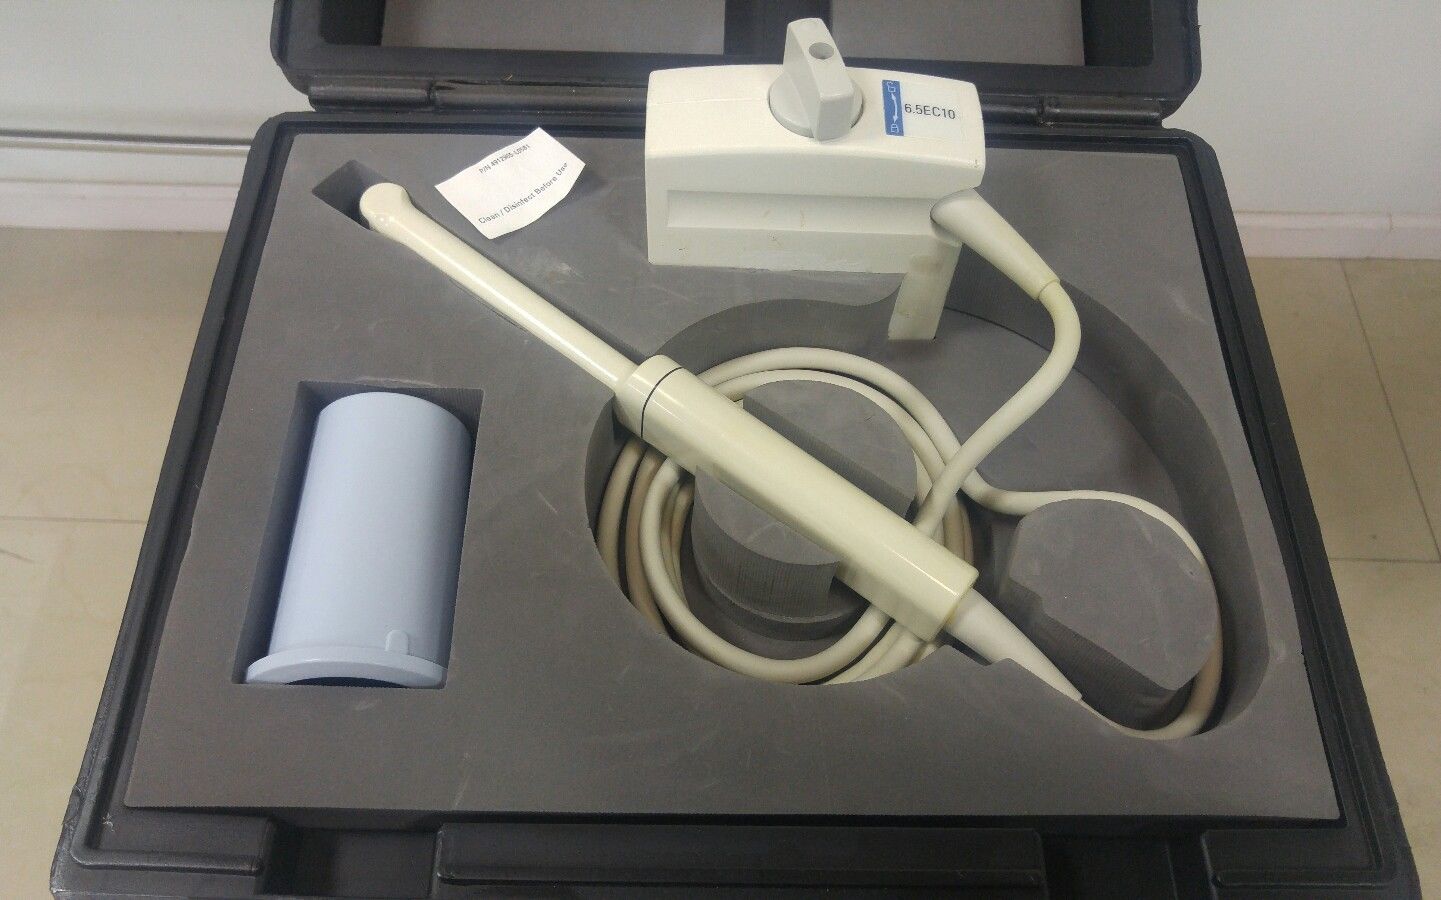 Siemens 6.5EC10 Endovaginal Ultrasound Curved Array Transducer Probe DIAGNOSTIC ULTRASOUND MACHINES FOR SALE